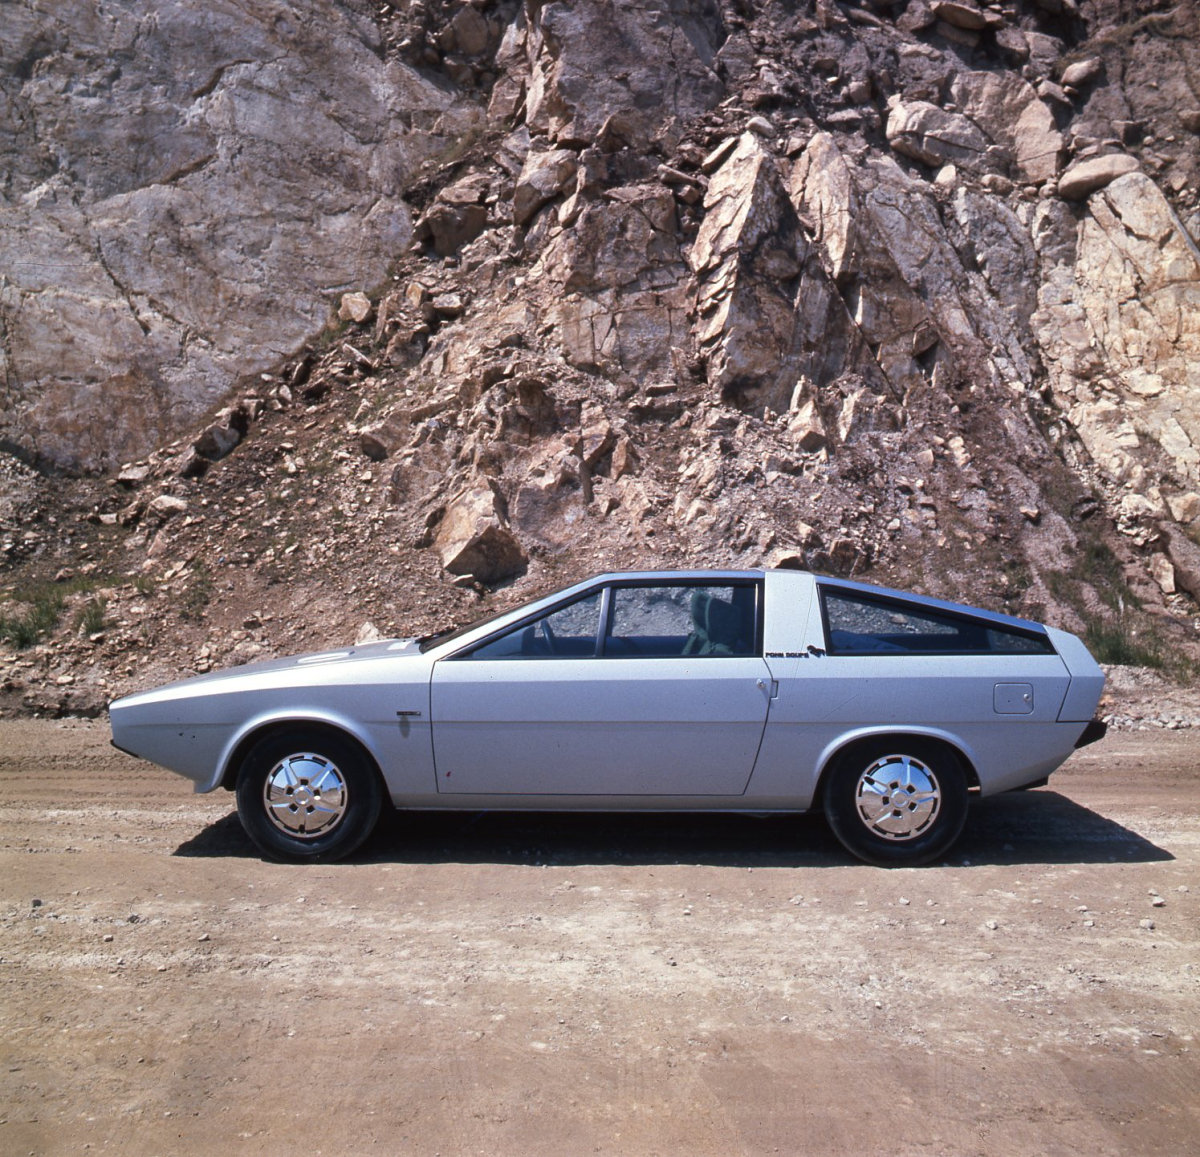 hyundai-giorgetto-giugiaro-1974-pony-coupe-concept-01_jpg